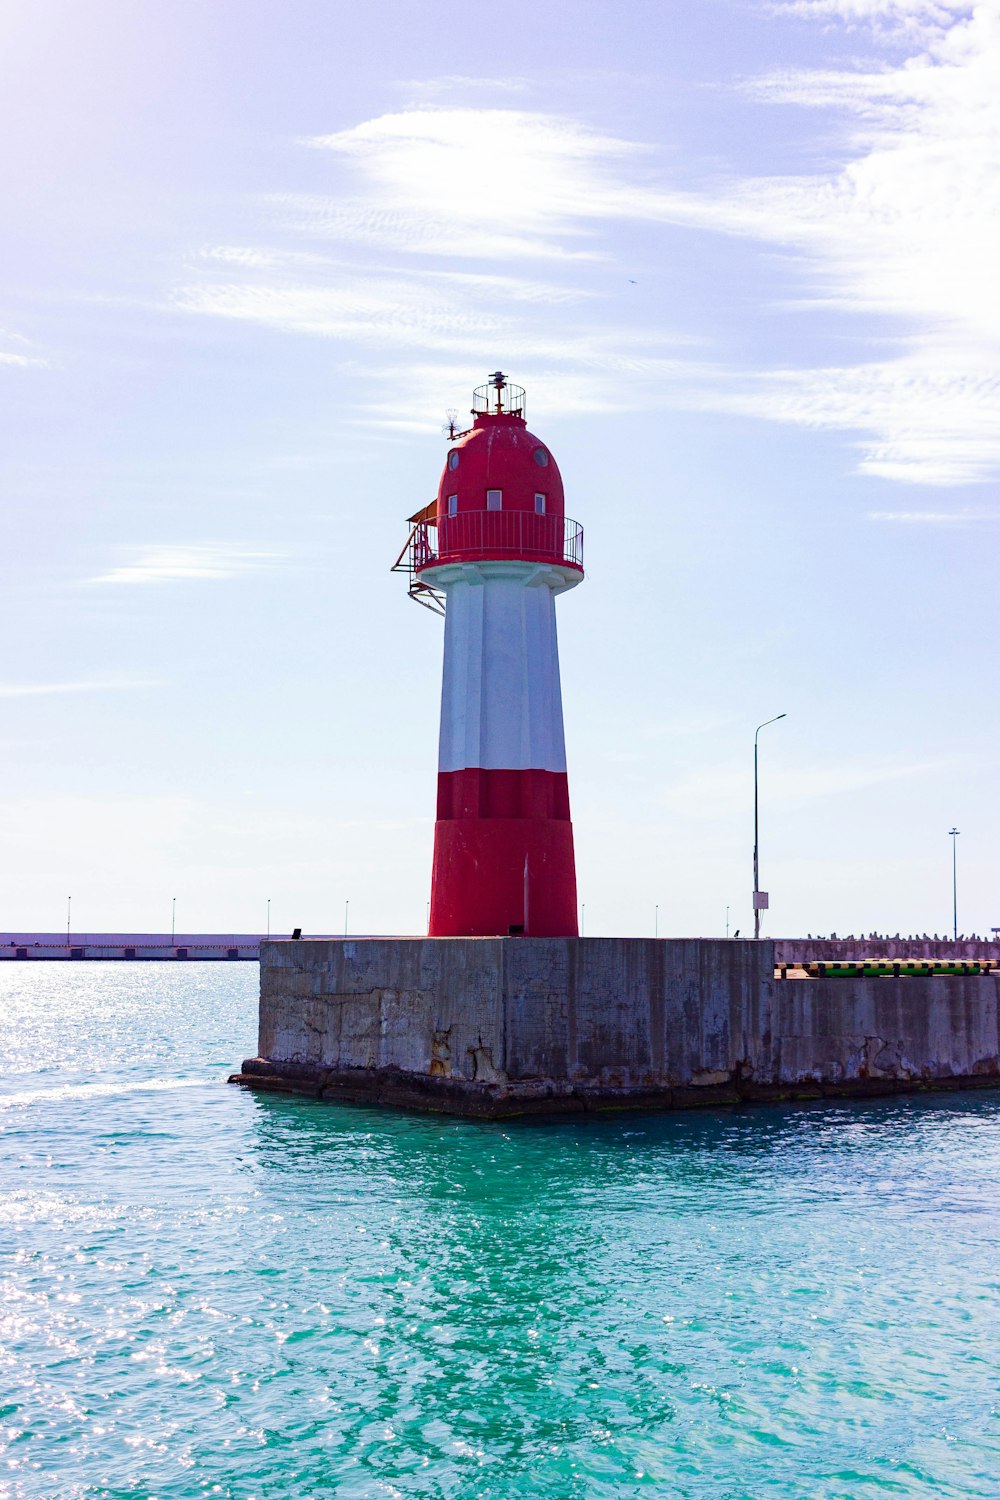 a lighthouse on a dock